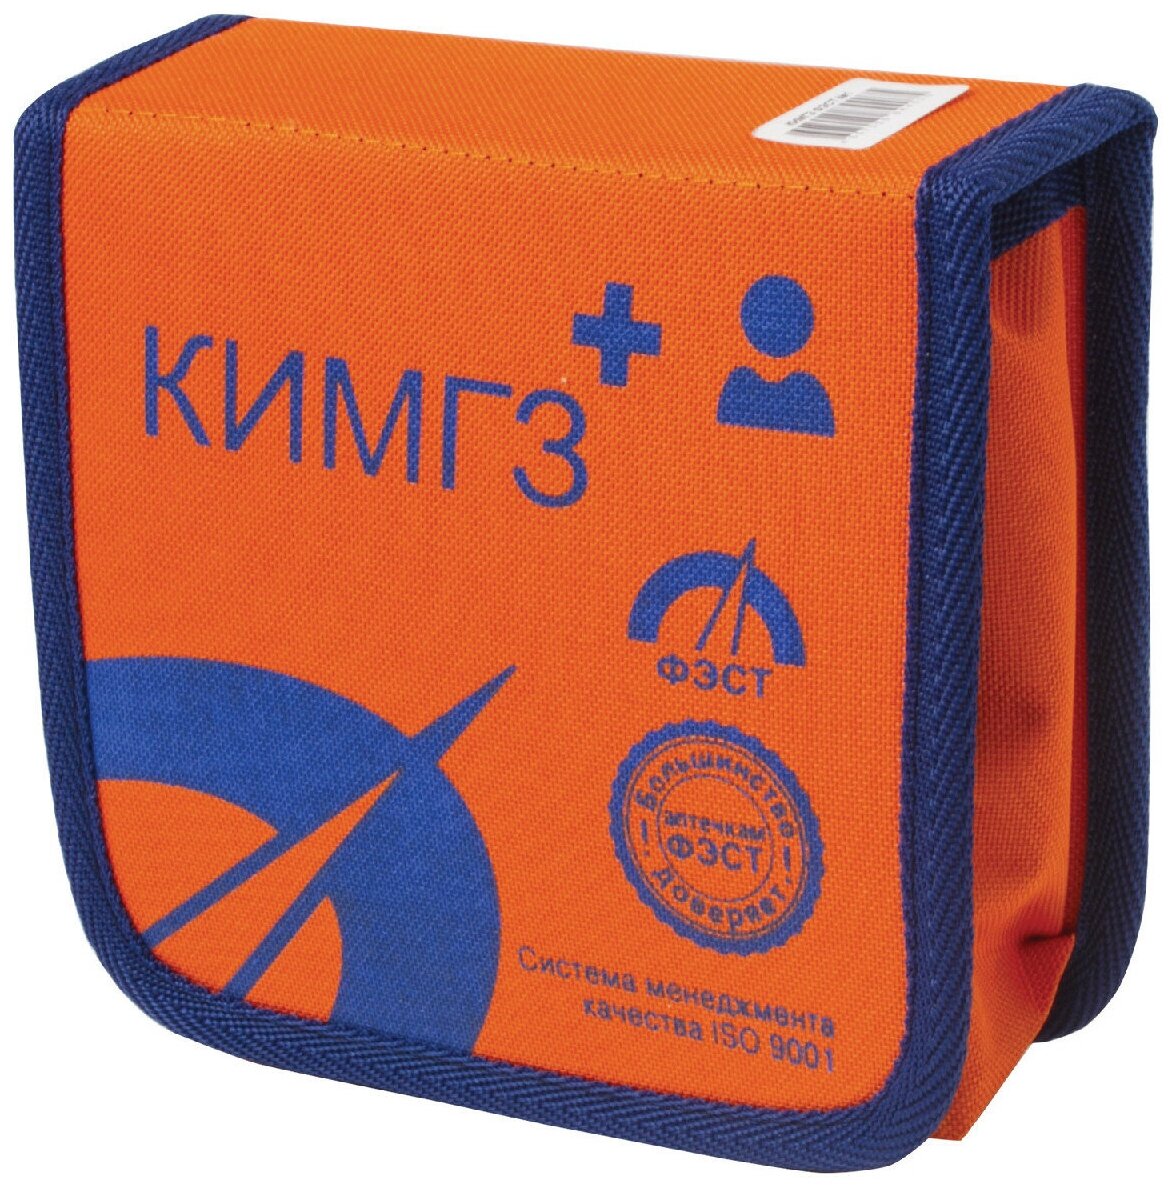 Аптечка базовый КИМГЗ-147(9+К) ФЭСТ, сумка, по приказу № 70н